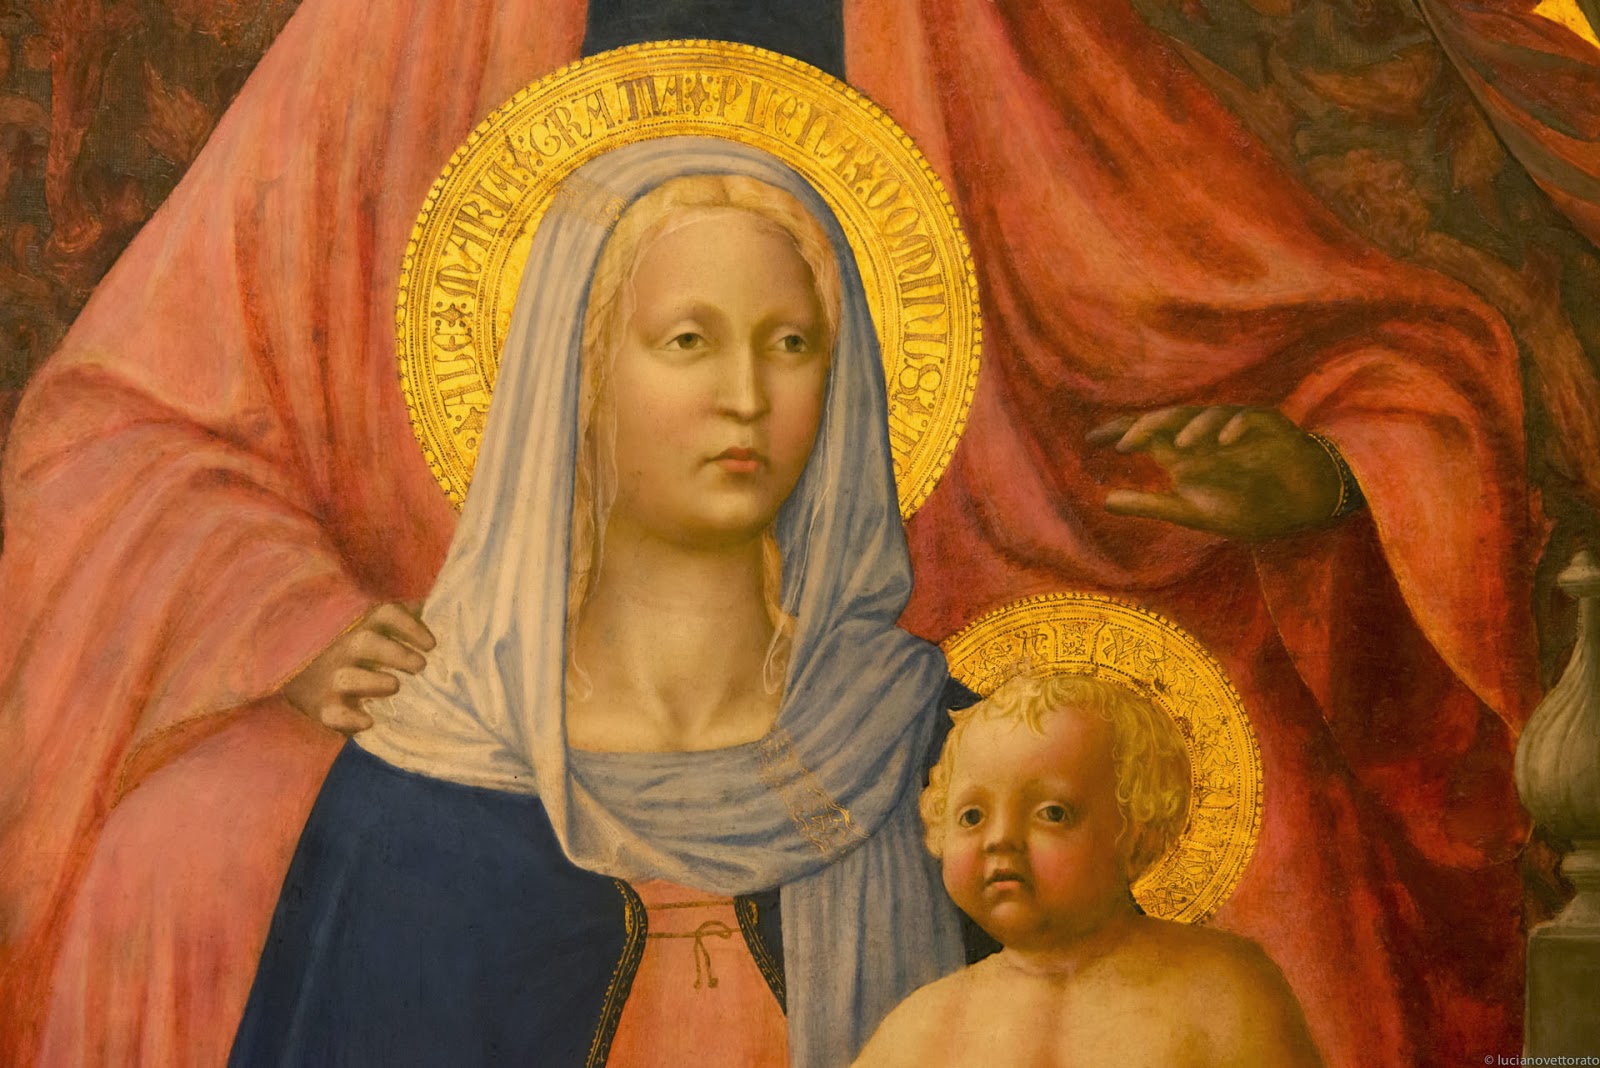 Masaccio-1401-1428 (39).jpg